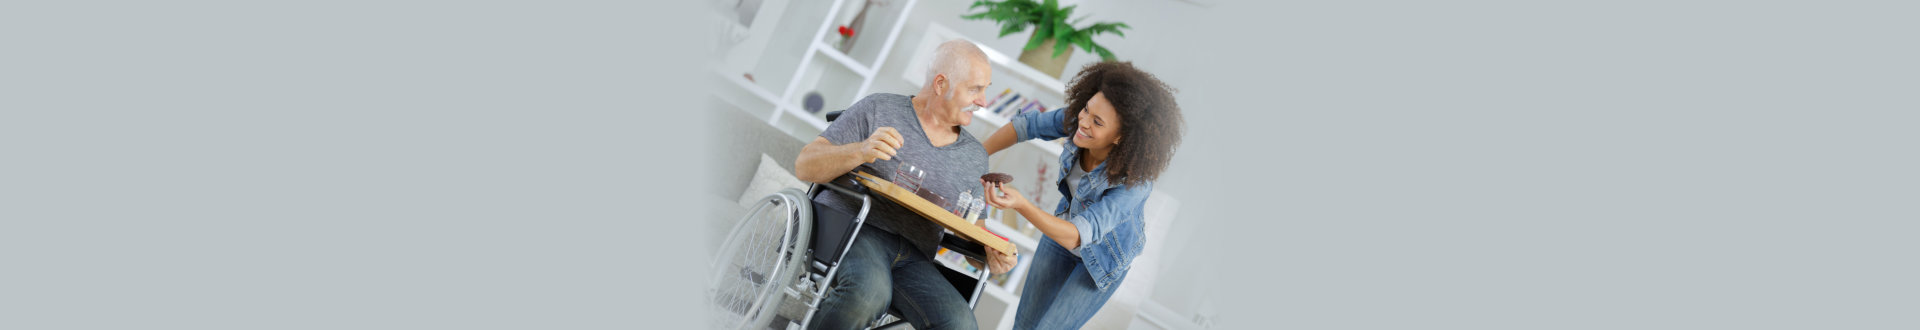 an elderly man and a caregiver smiling together